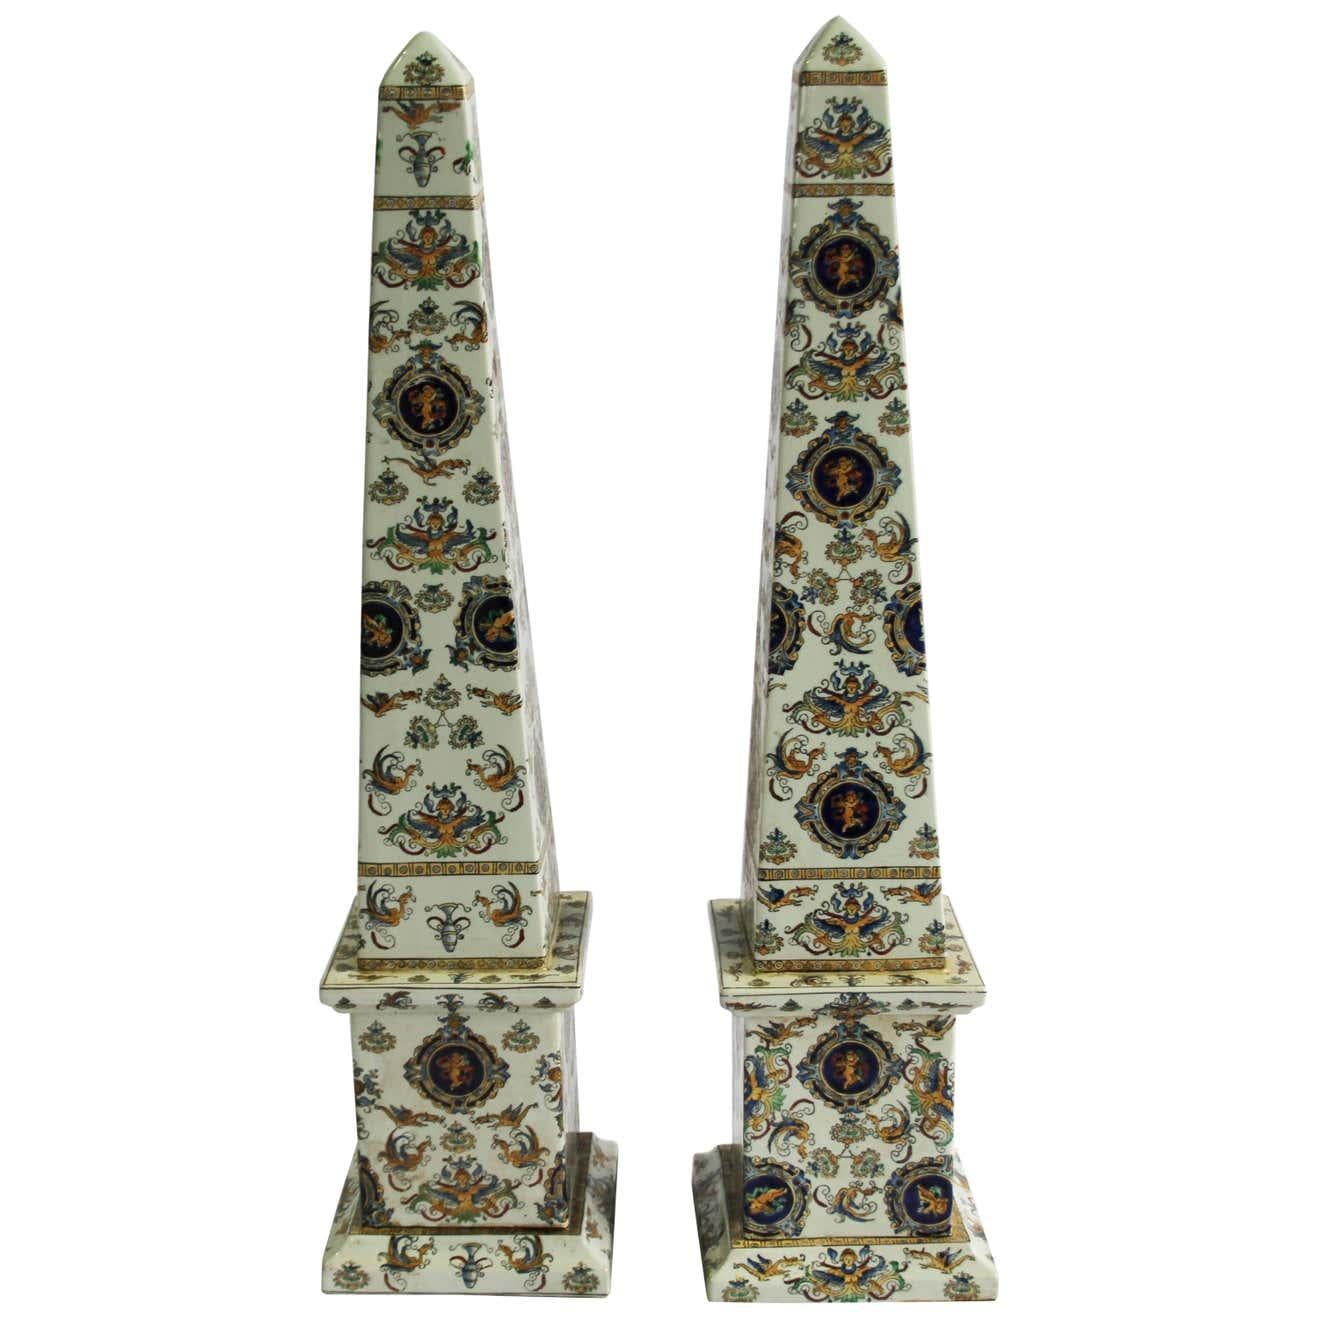 Pair of highly decorative, hand painted porcelain obelisks. Wonderful vibrant colour decoration with cherubs on plaques.